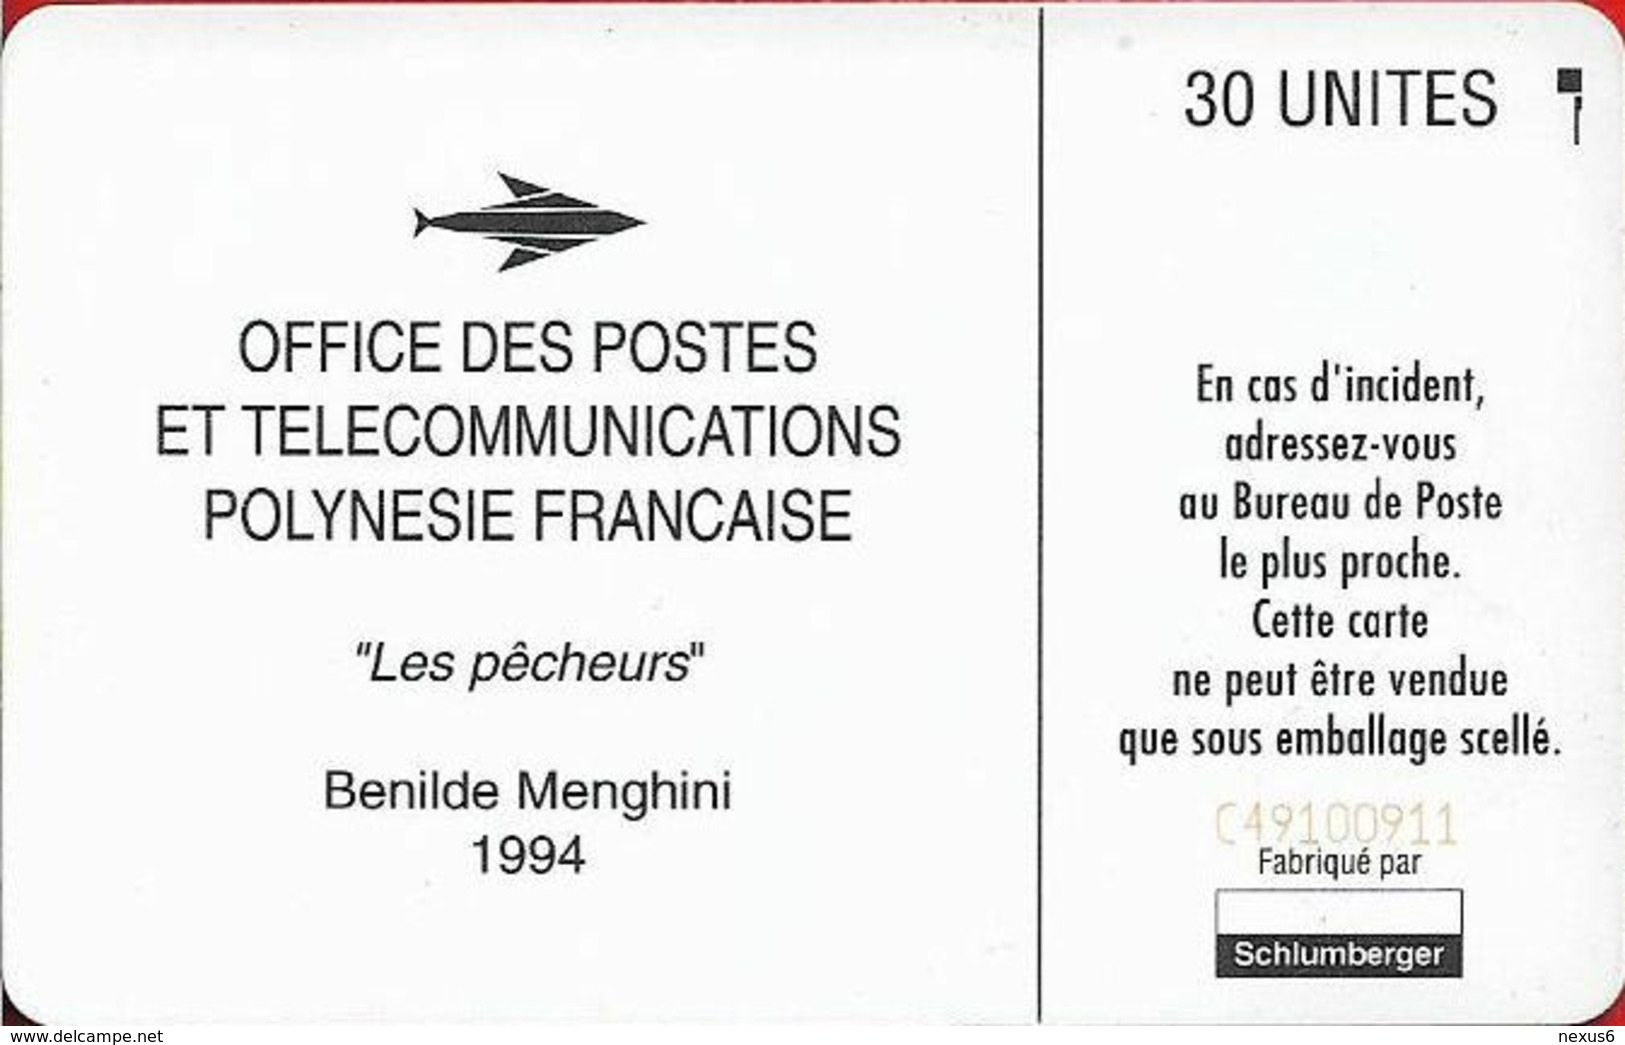 French Polynesia - OPT - Les Pêcheurs 1994 - SC5, Glossy Finish, Cn. C491xxxxx, 08.1994, 30Units, 50.000ex, Used - Polynésie Française